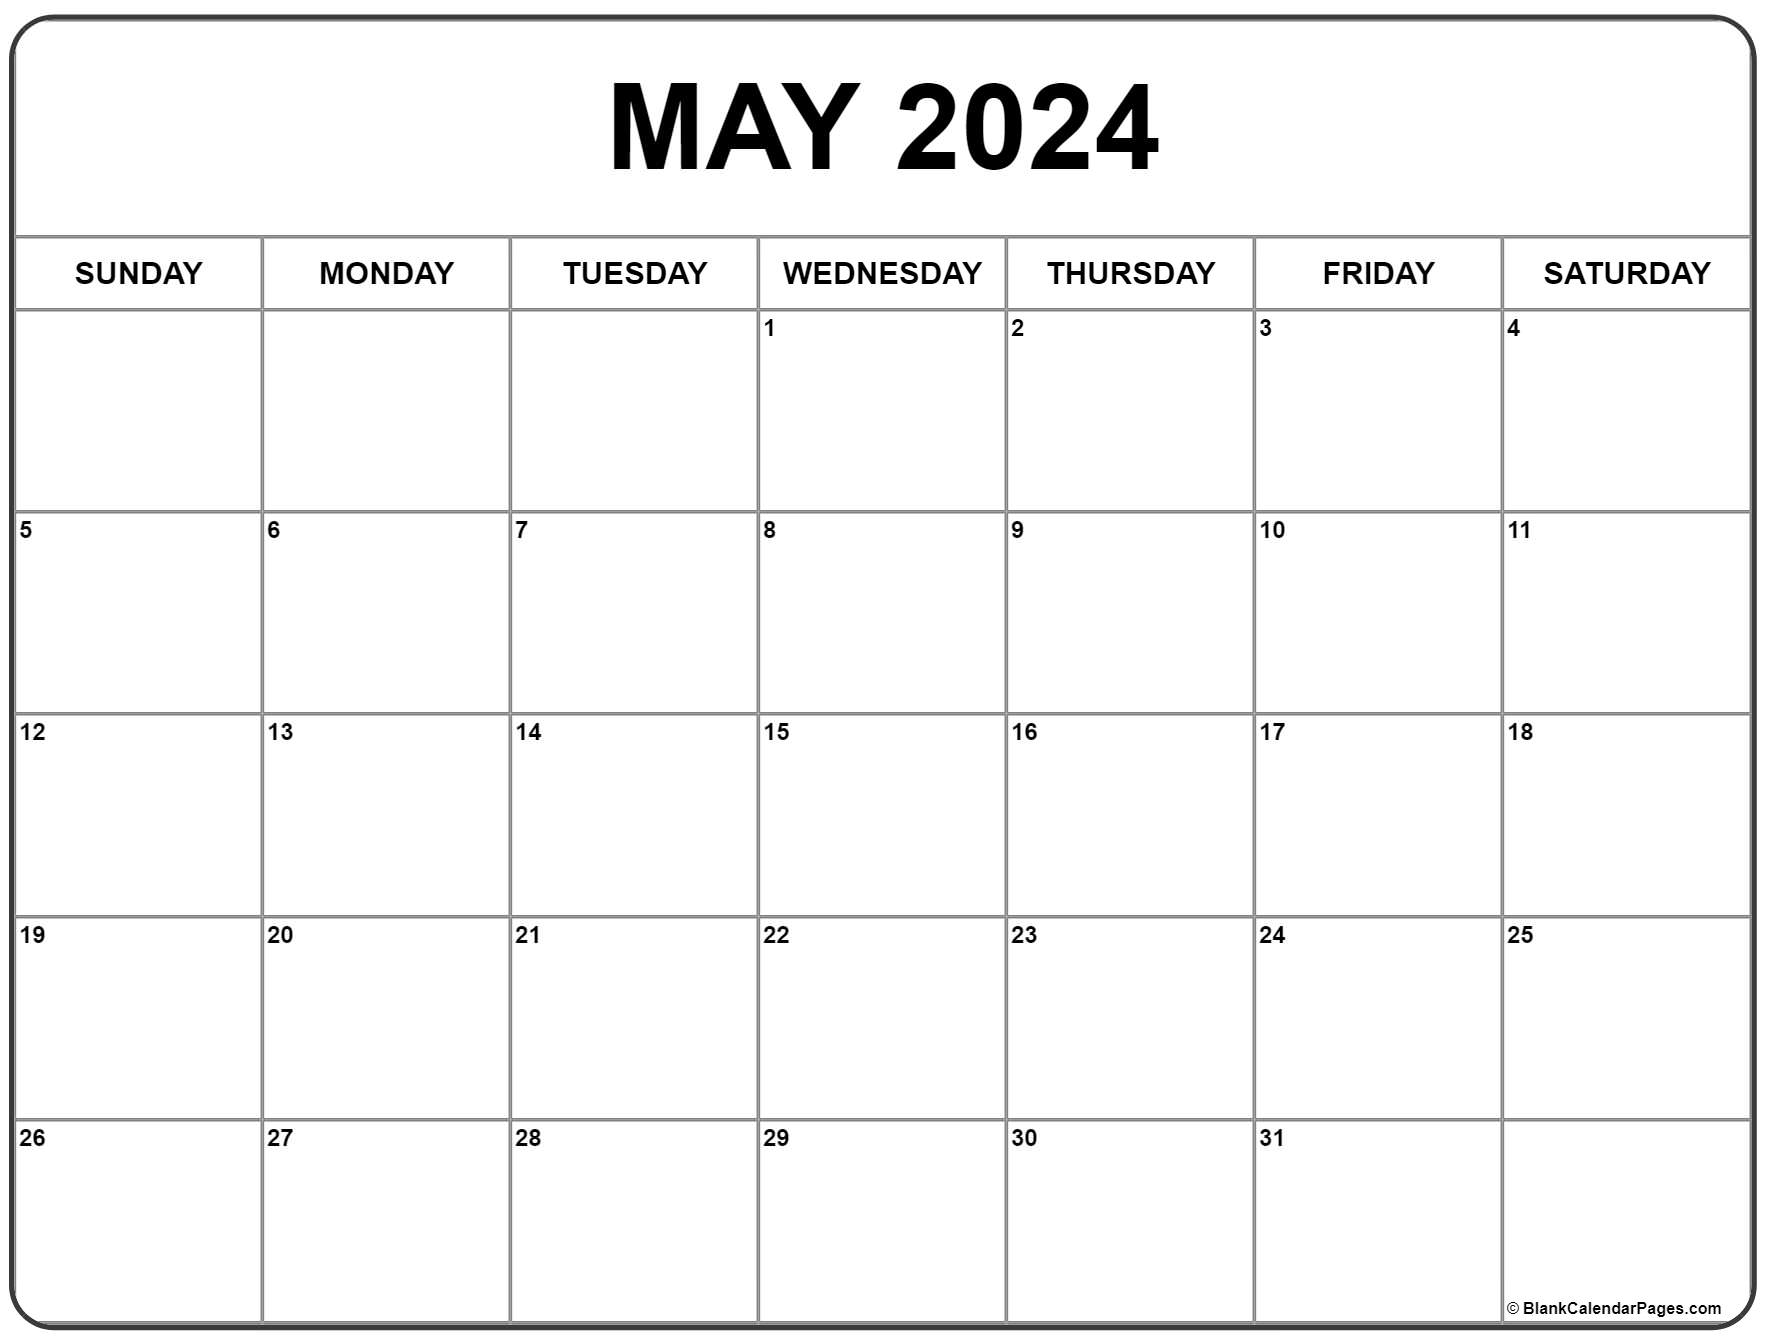 May 2024 Calendar | Free Printable Calendar for Monthly Printable Calendar May 2024